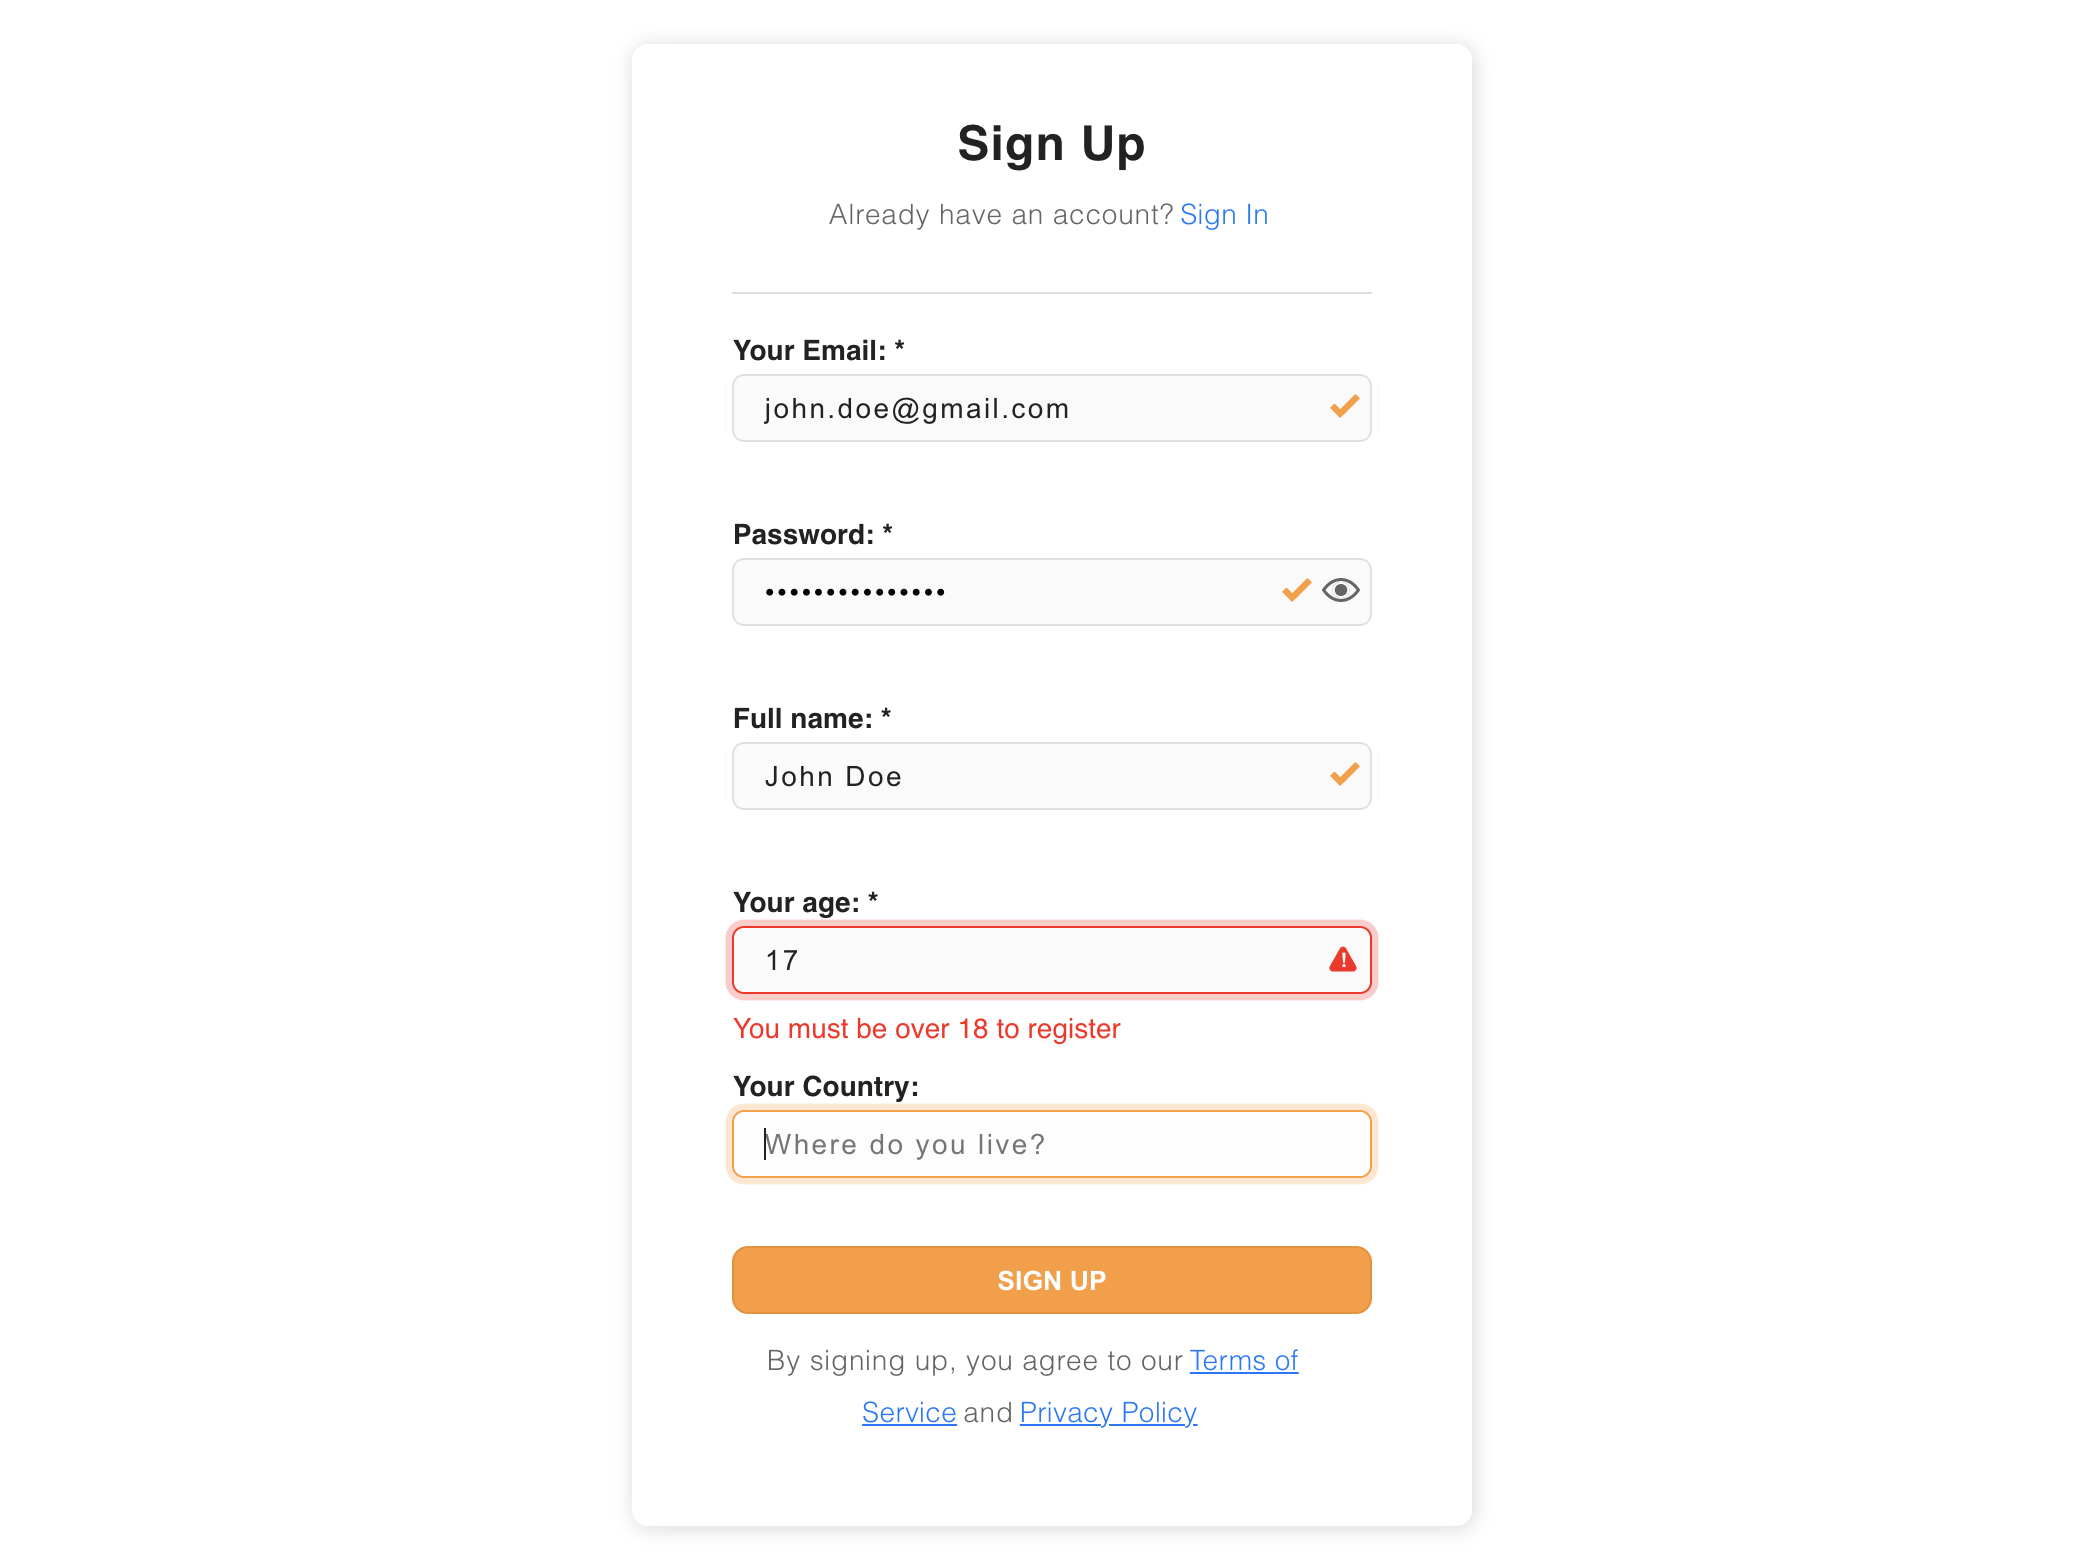 Prebuilt form UI with custom validation